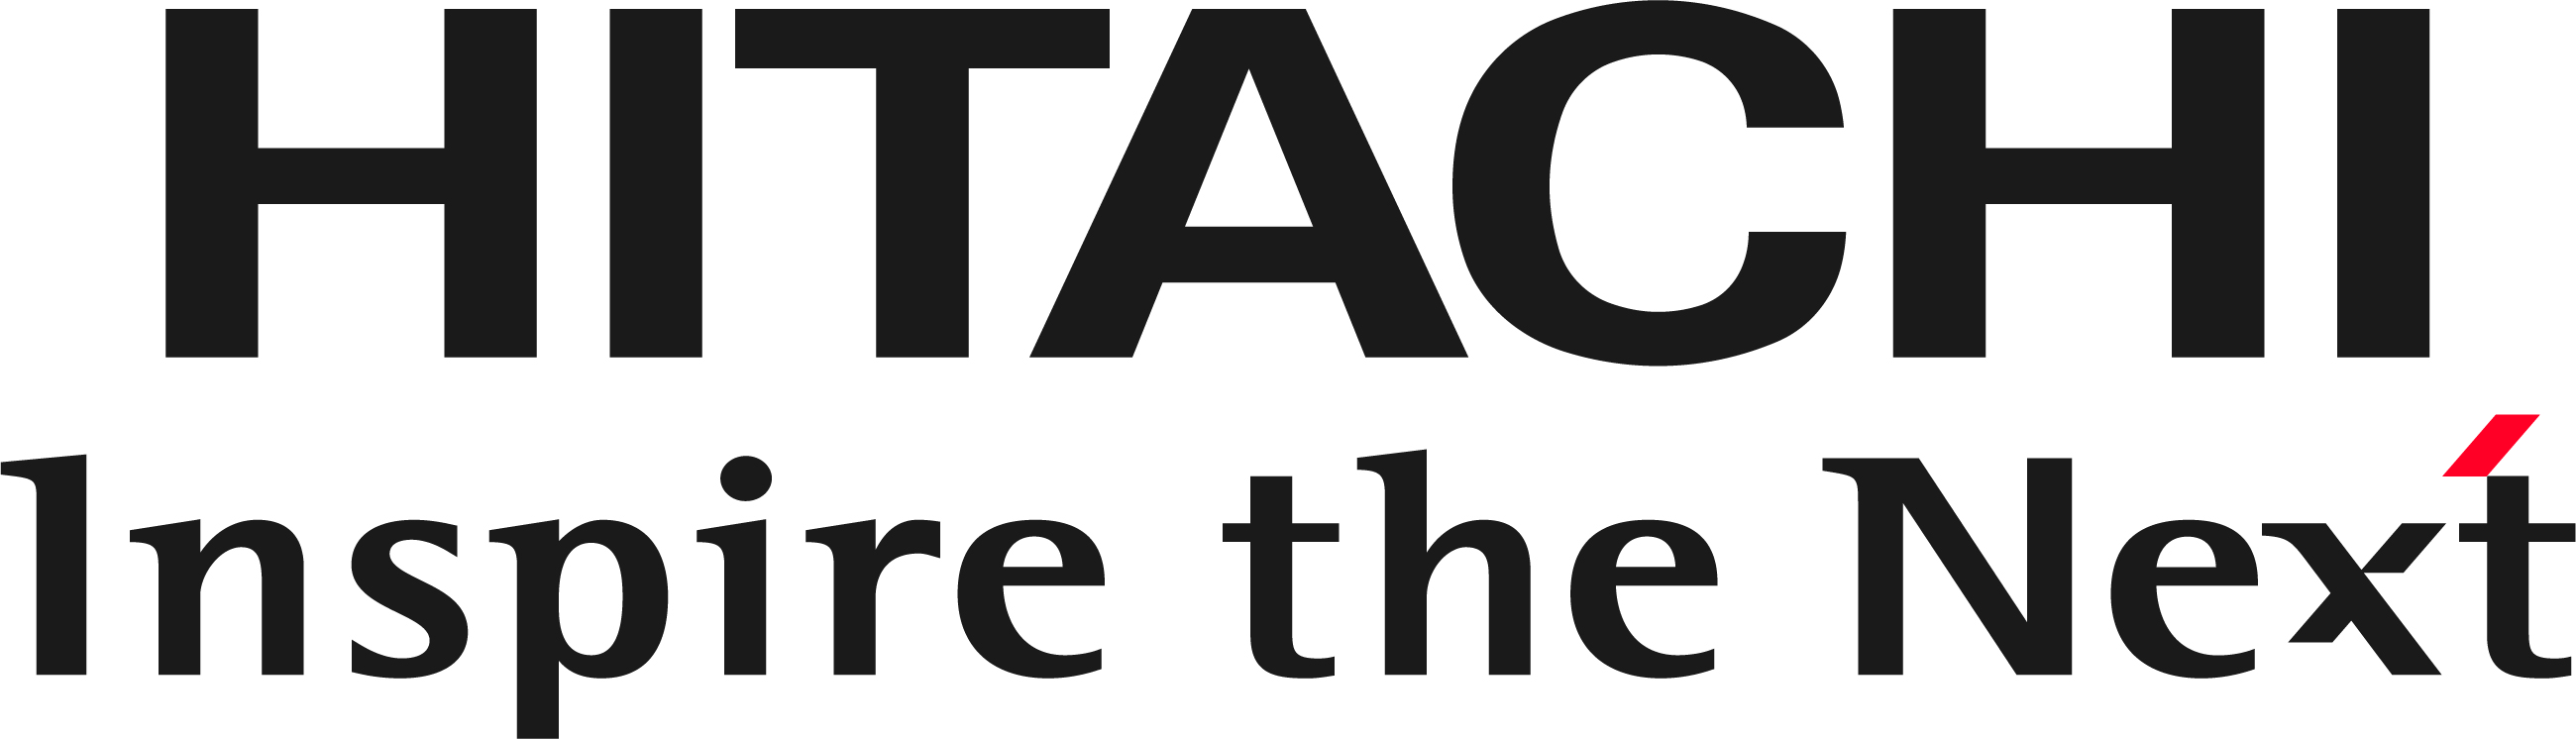 Hitachi | Inspire the next logo